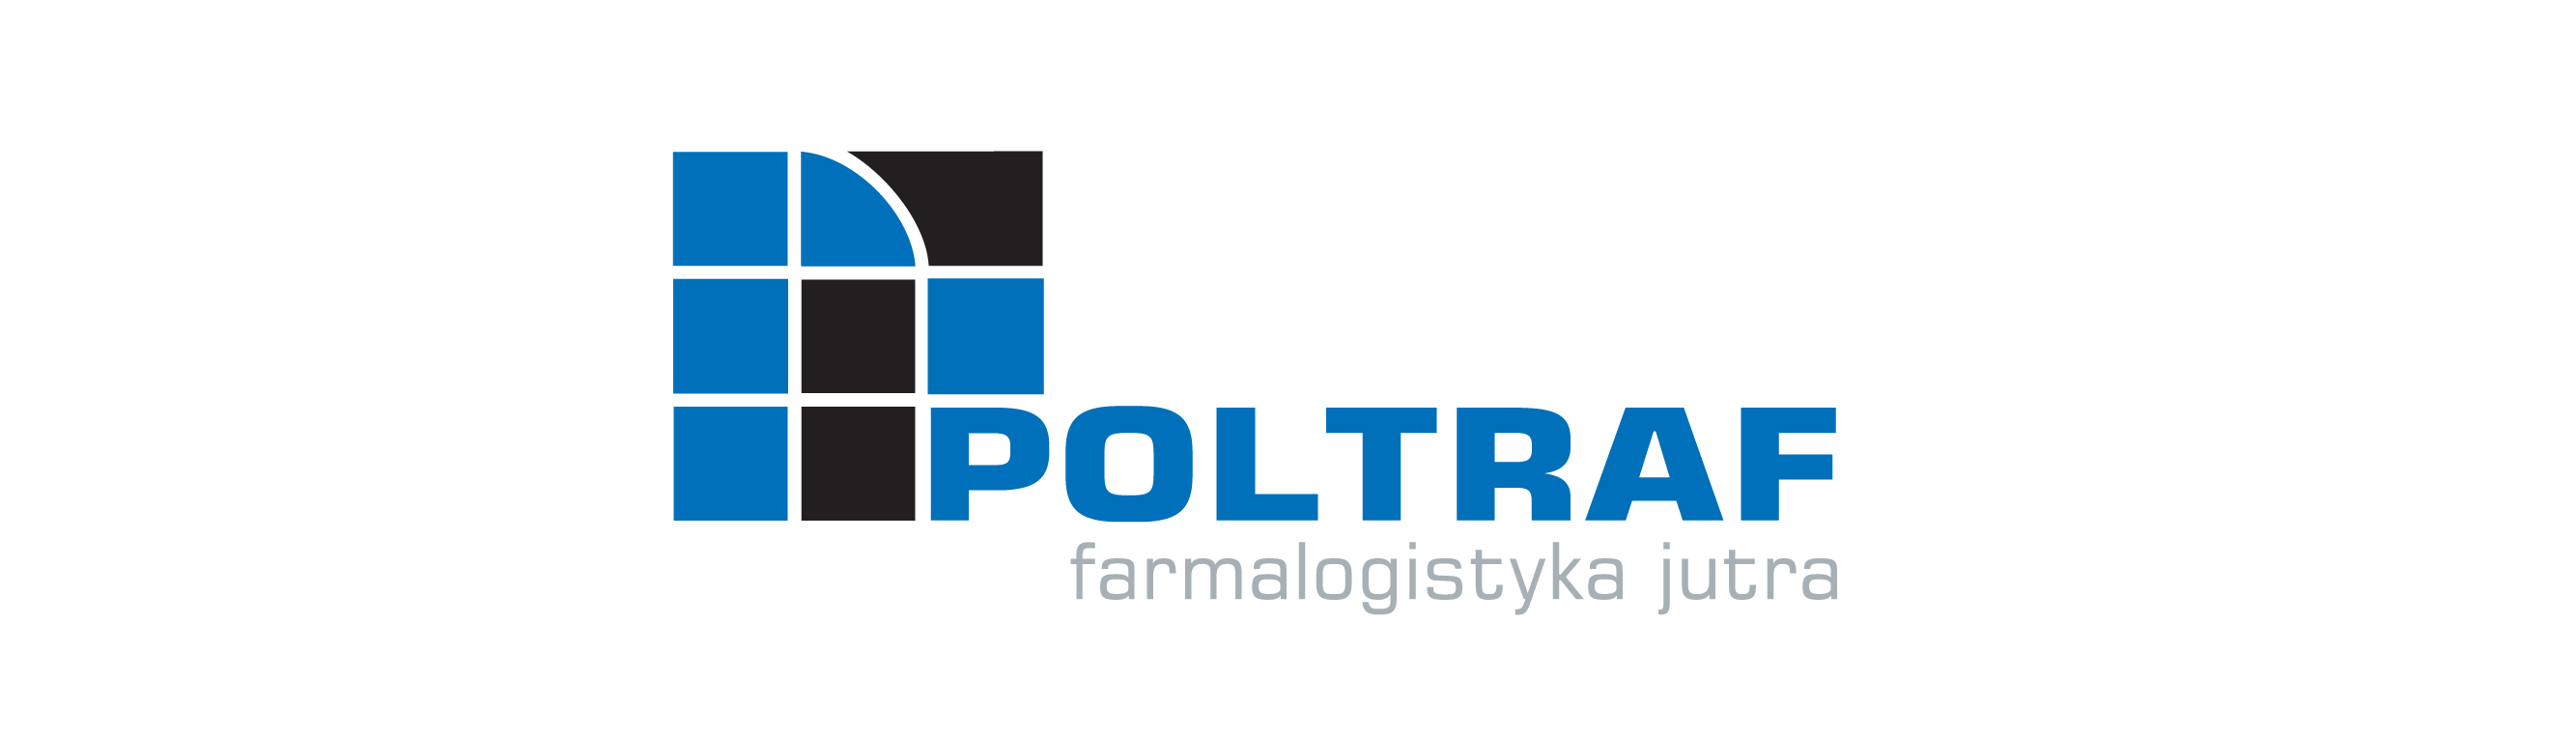 poltraf-logo